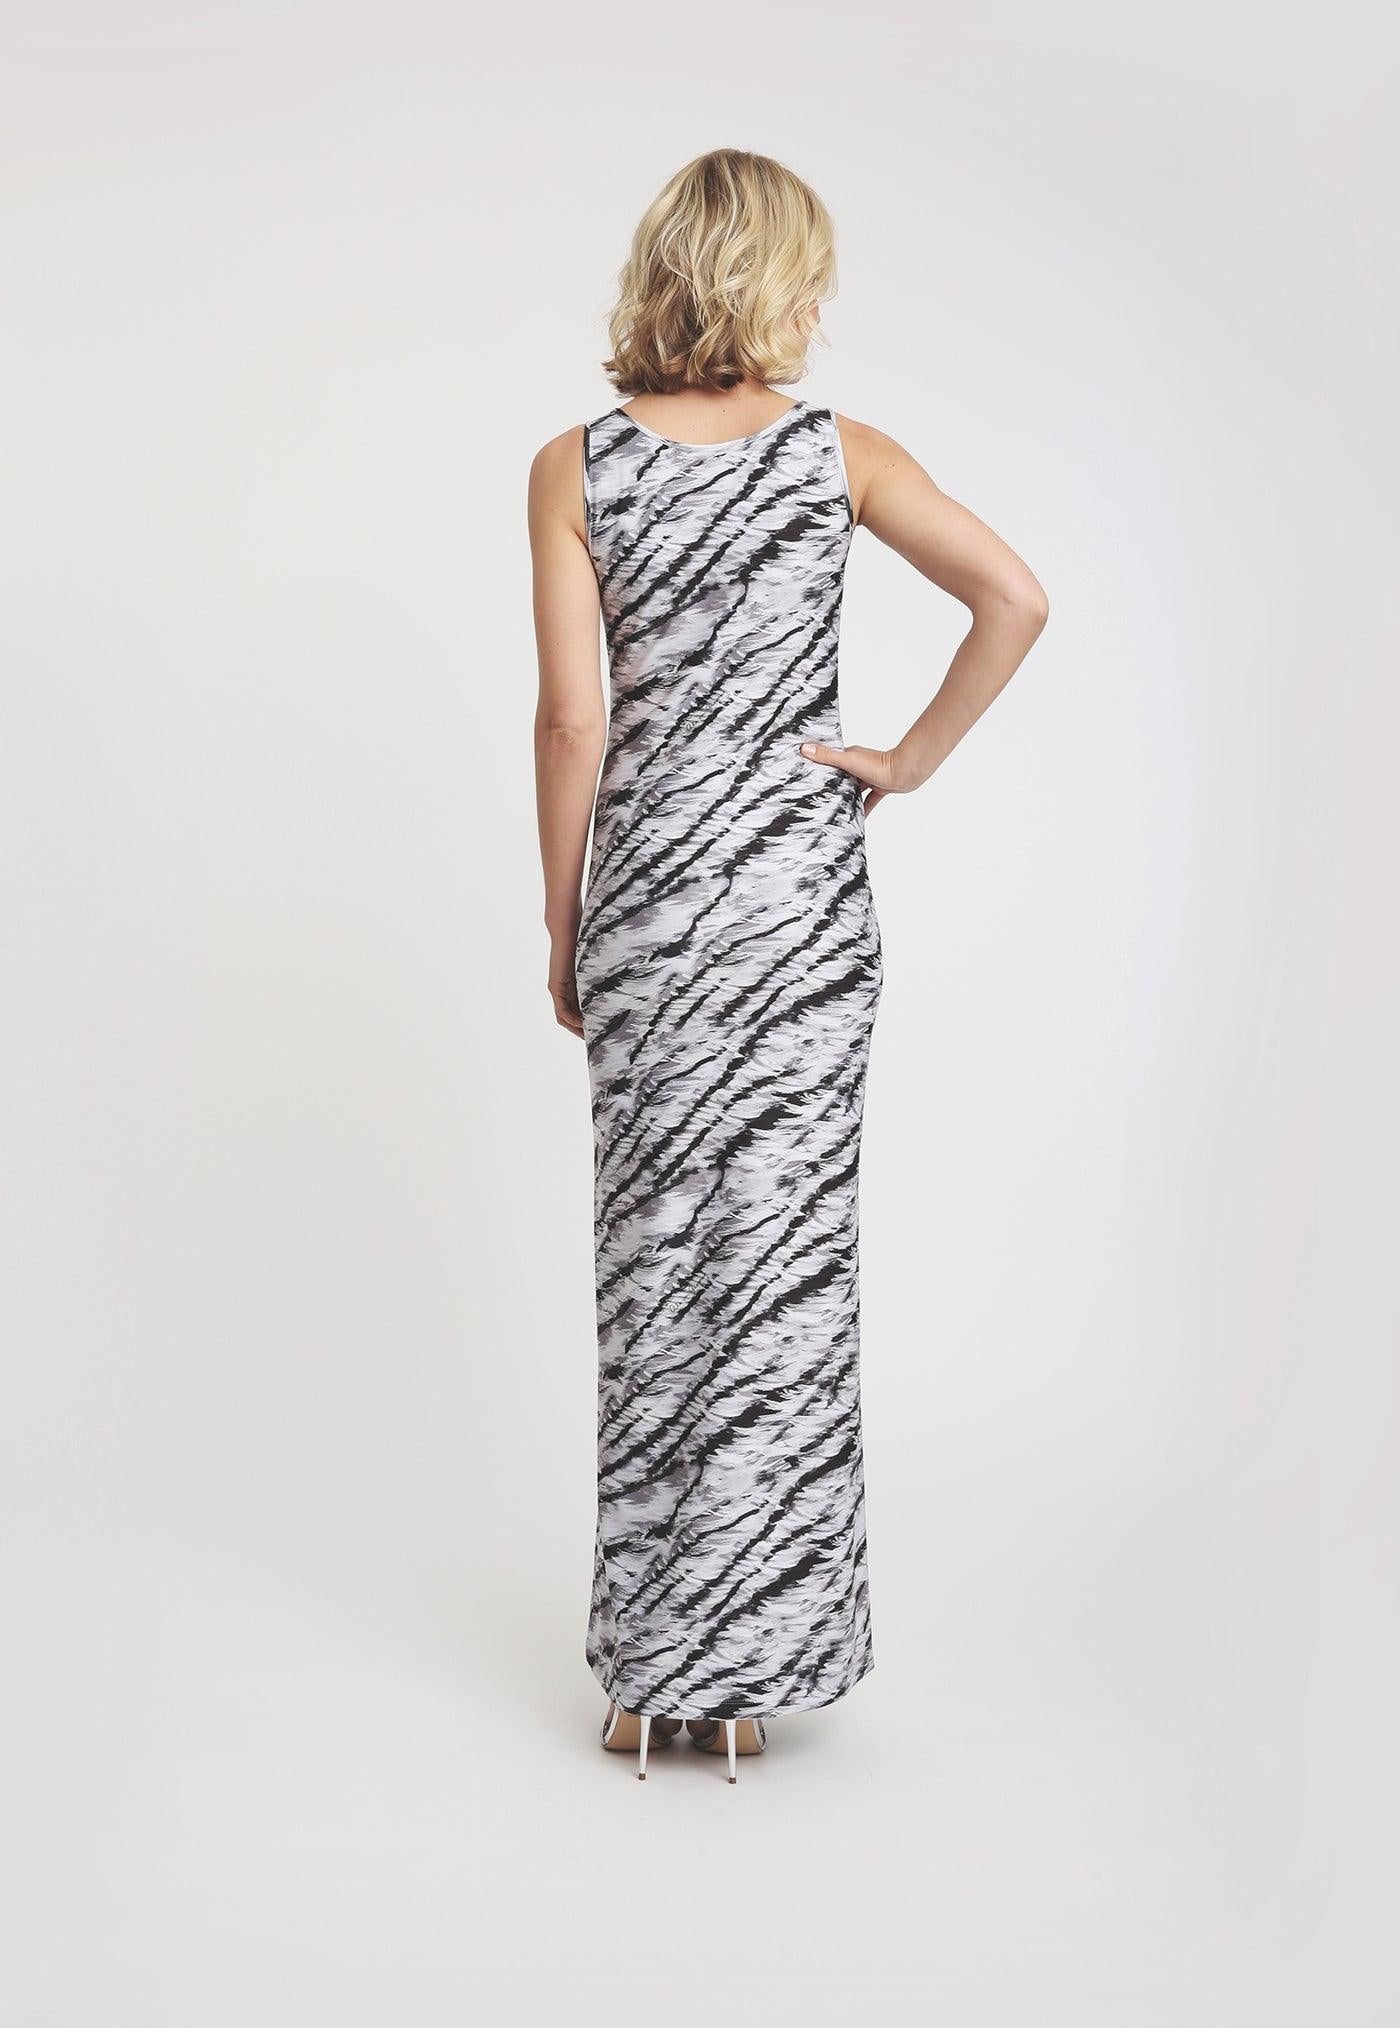 black and white tiger stripe printed long stretch knit dress